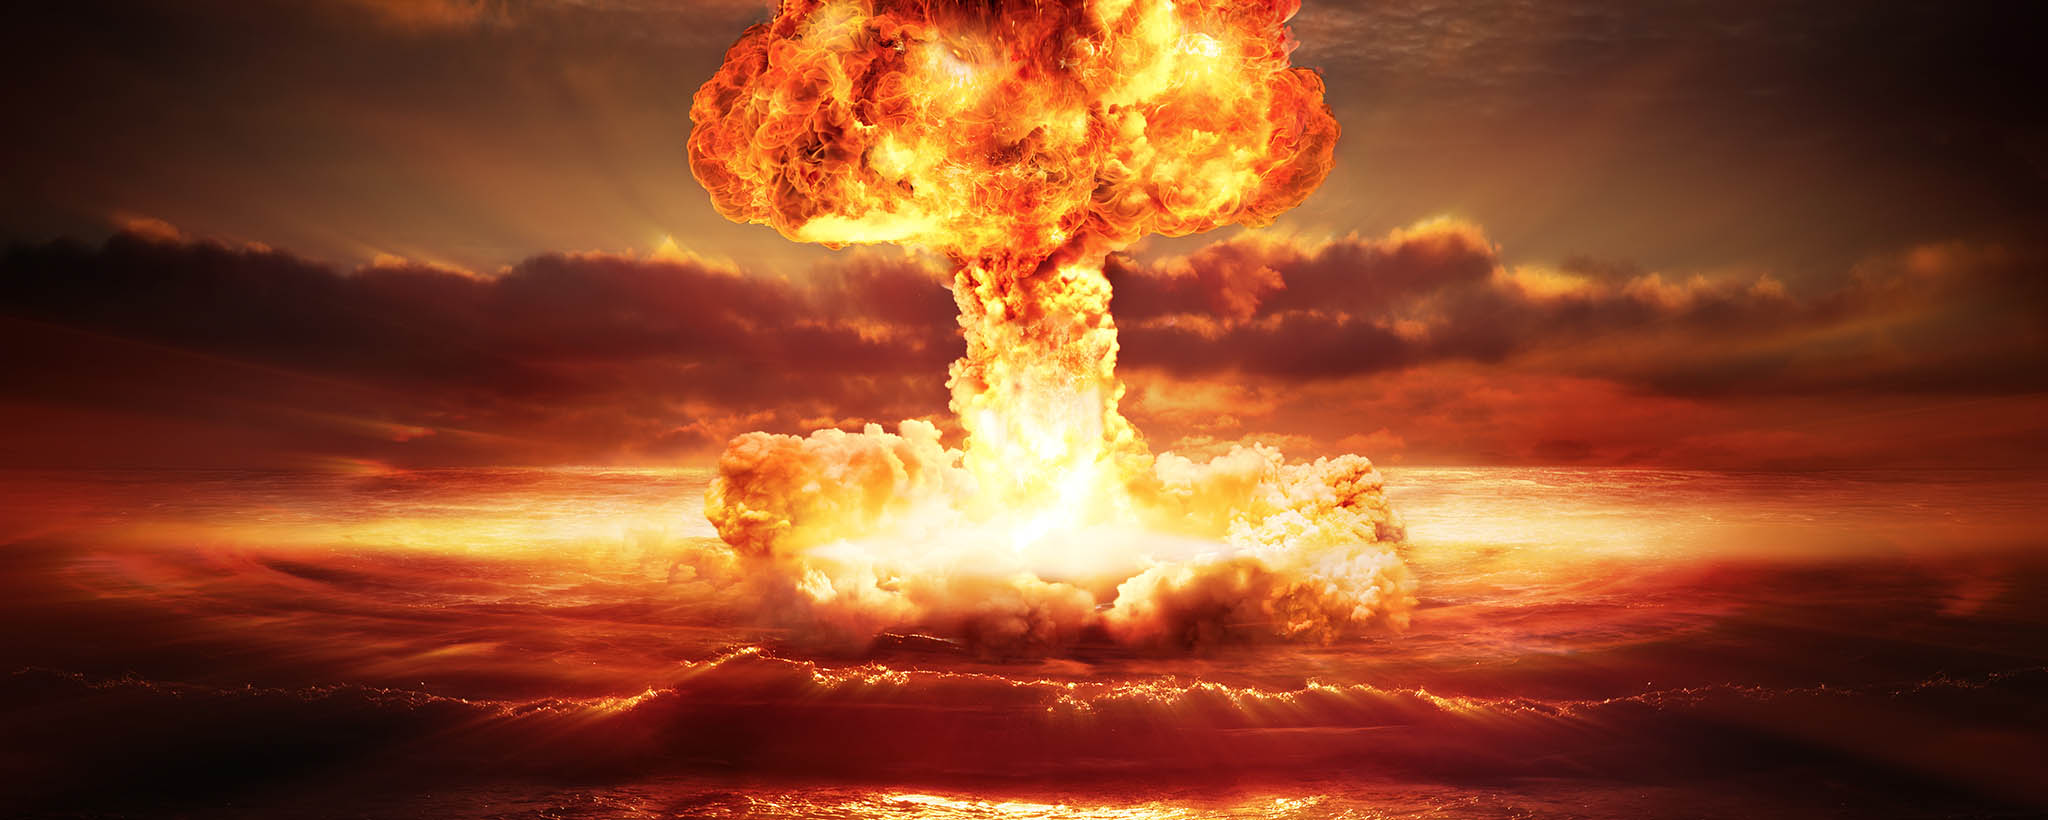 Explosión nuclear | Ready.gov